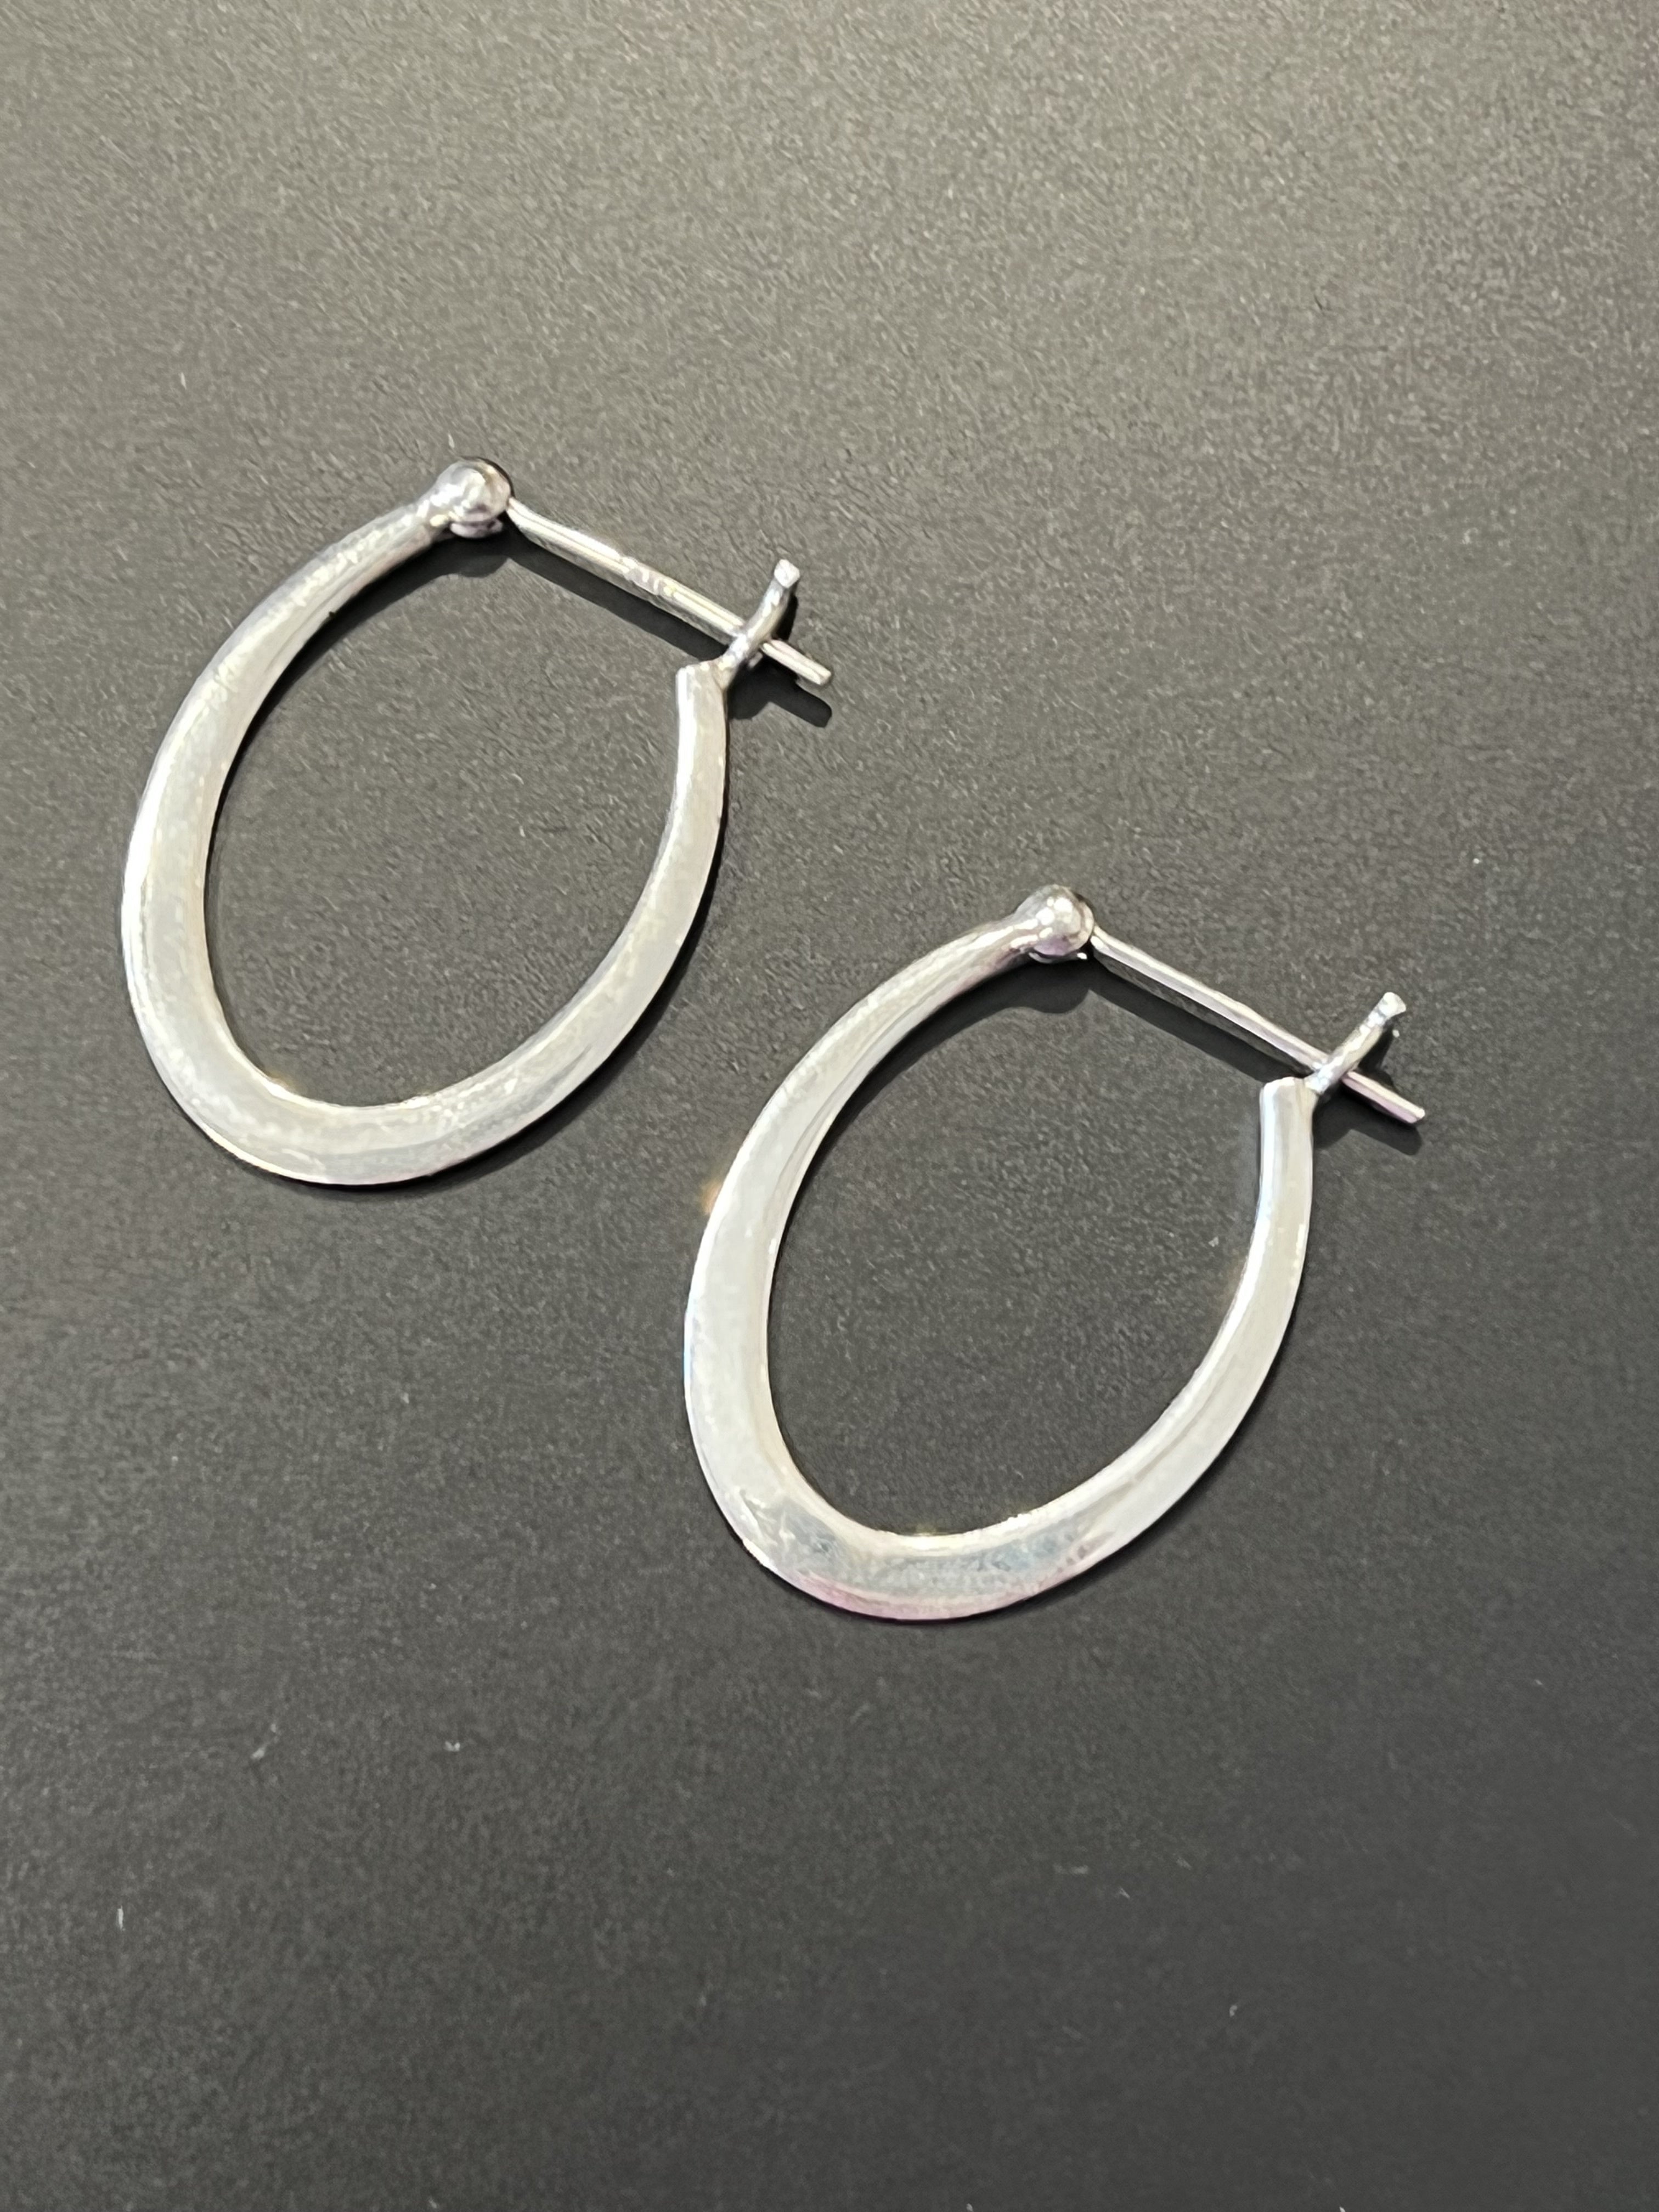 Devise Small Oval Hoop Earrings - Sterling Silver